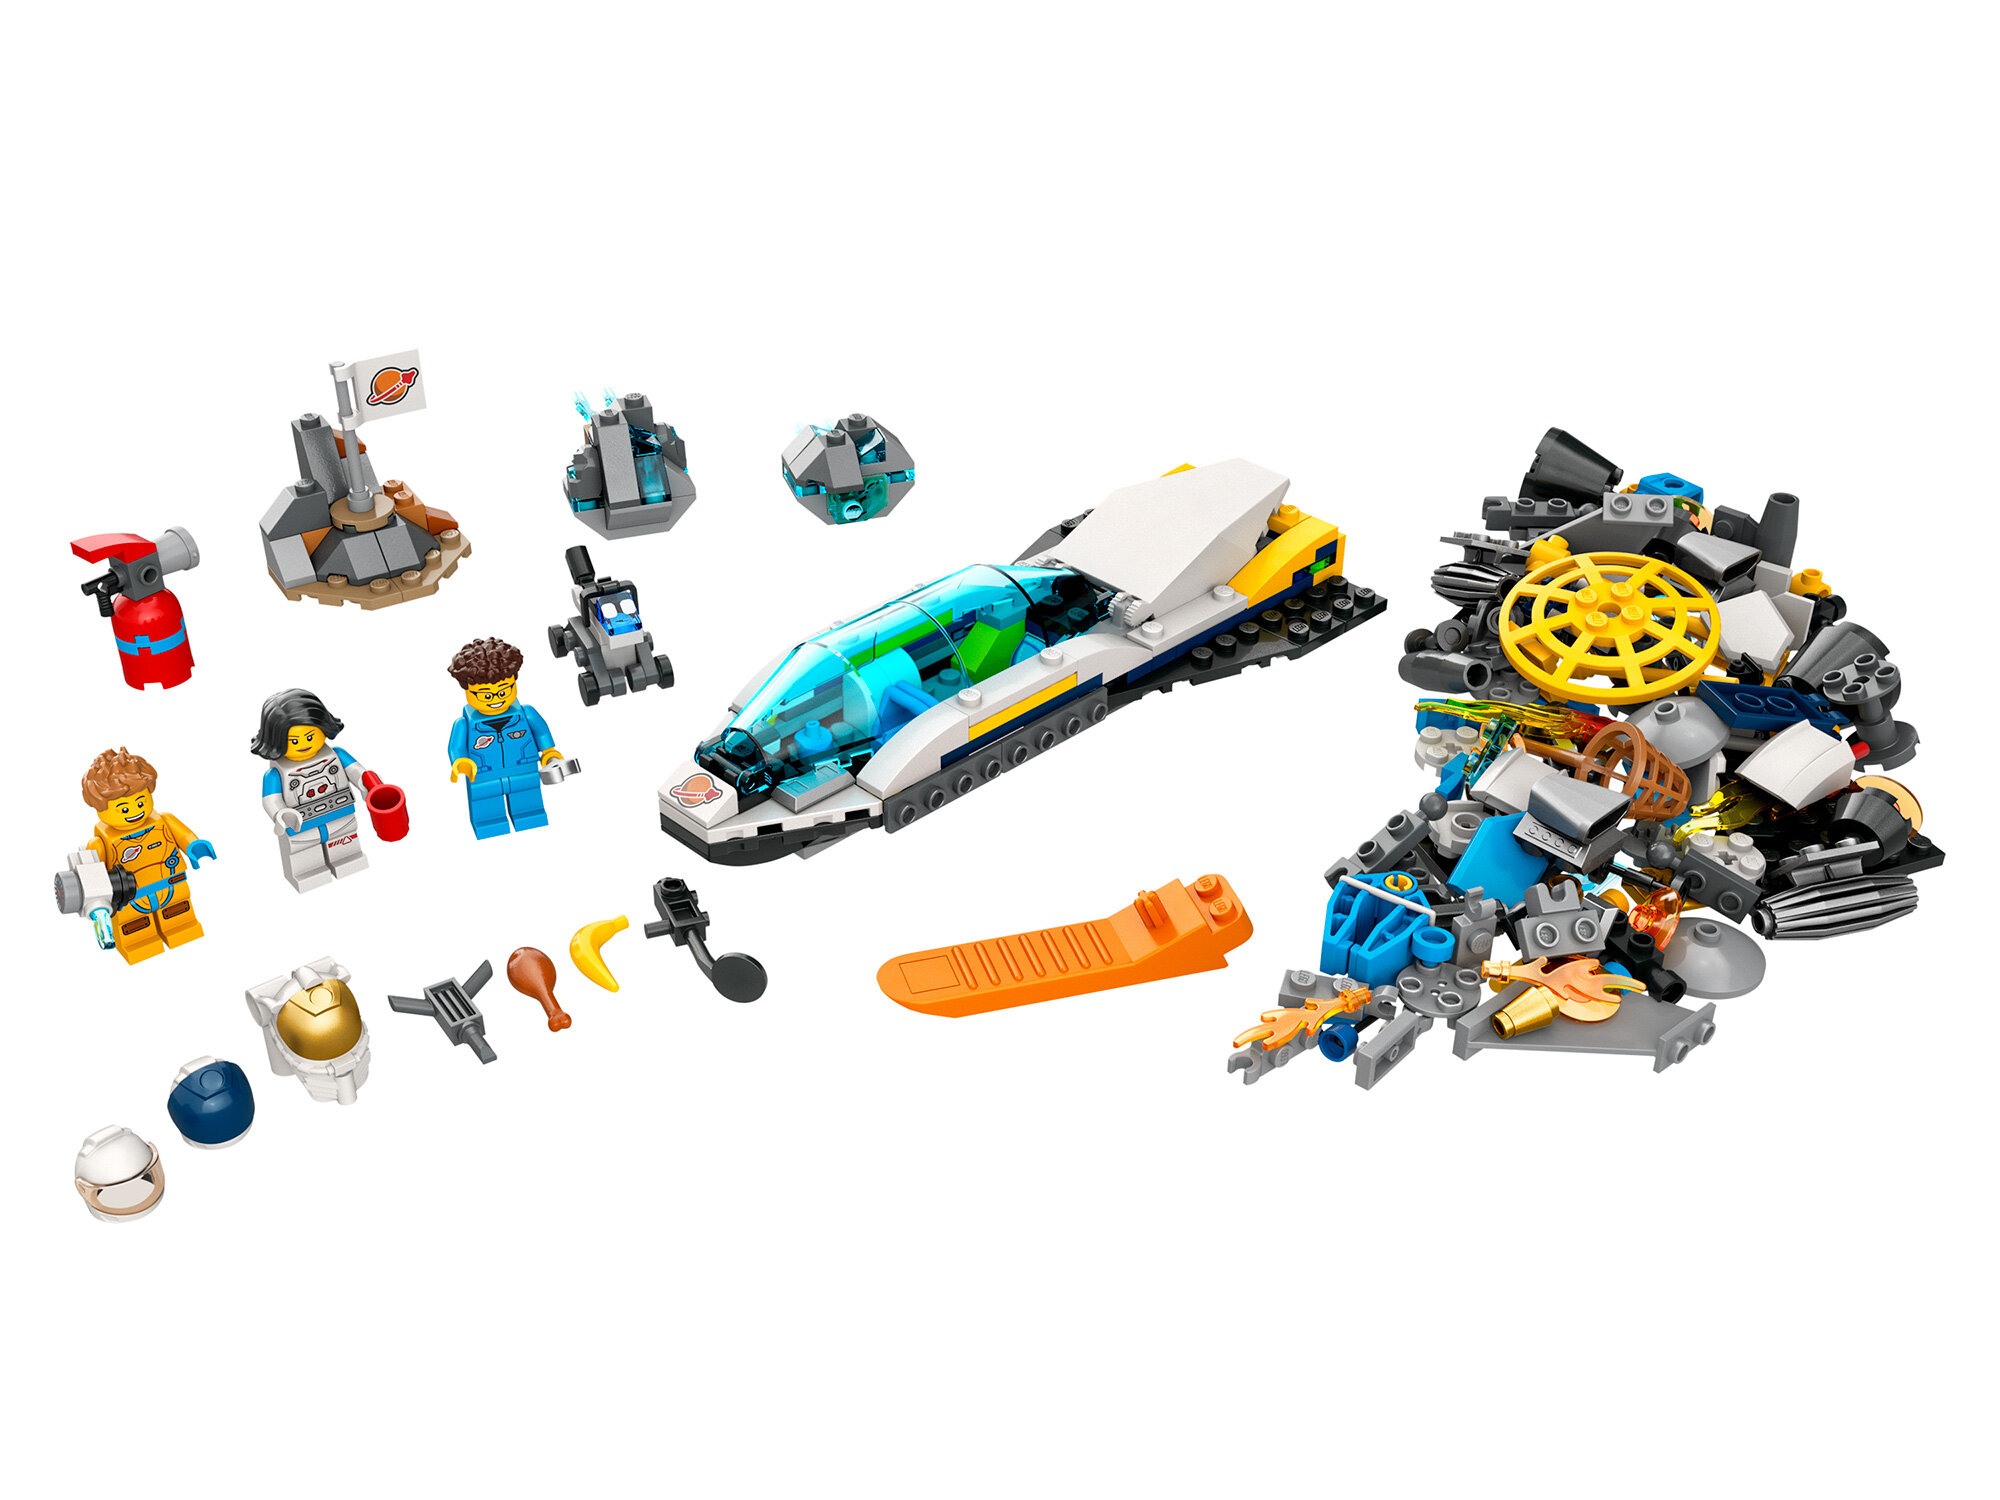 Конструктор Lego City Missions Mars Spacecraft Exploration Missions пластик (60354)